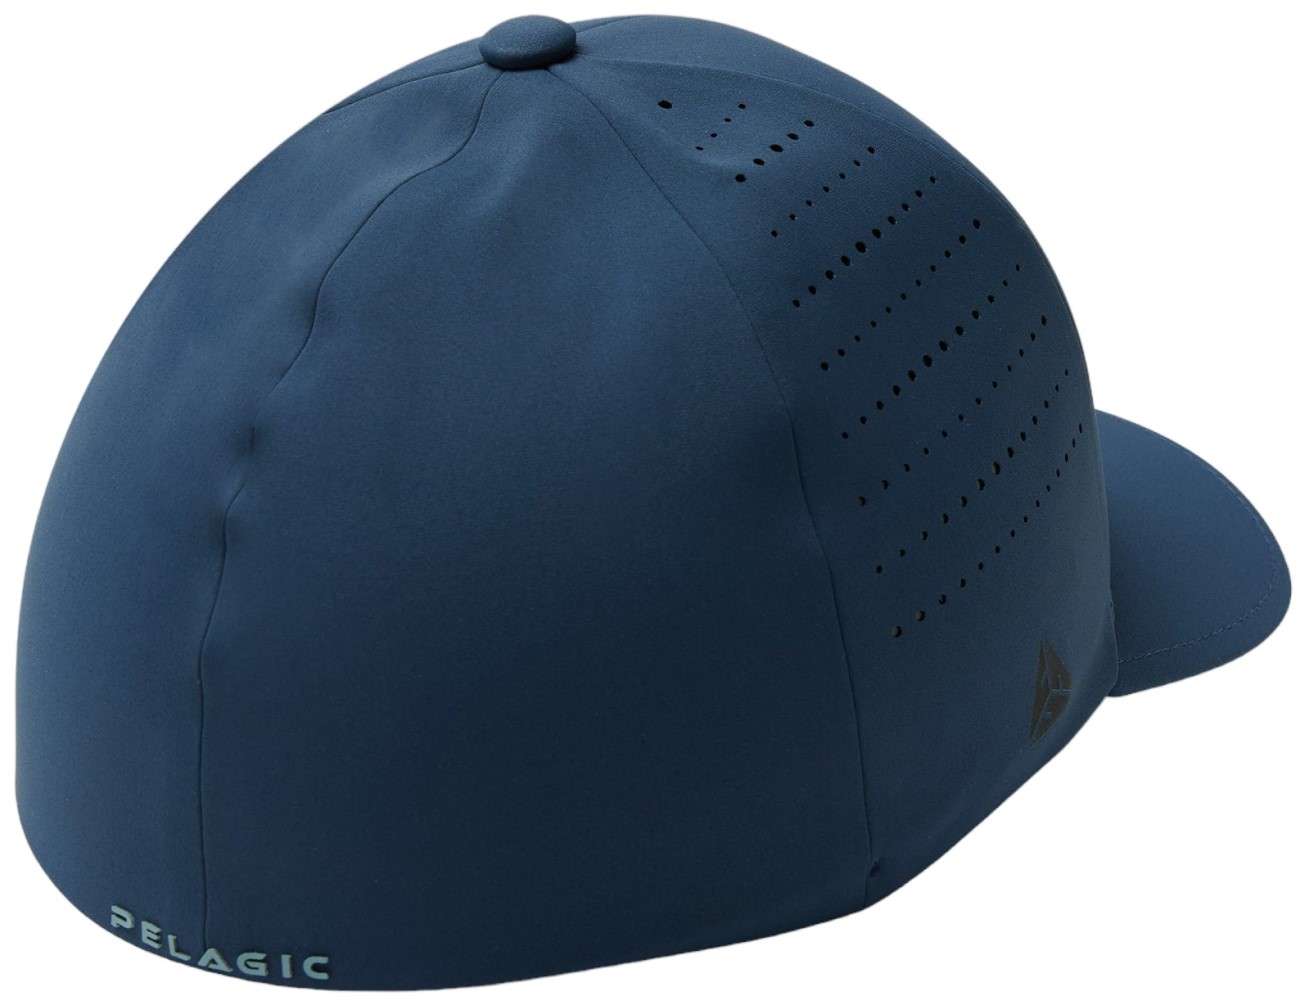 Pelagic Delta Flexfit Icon Hat - Smokey Blue - L/XL - TackleDirect